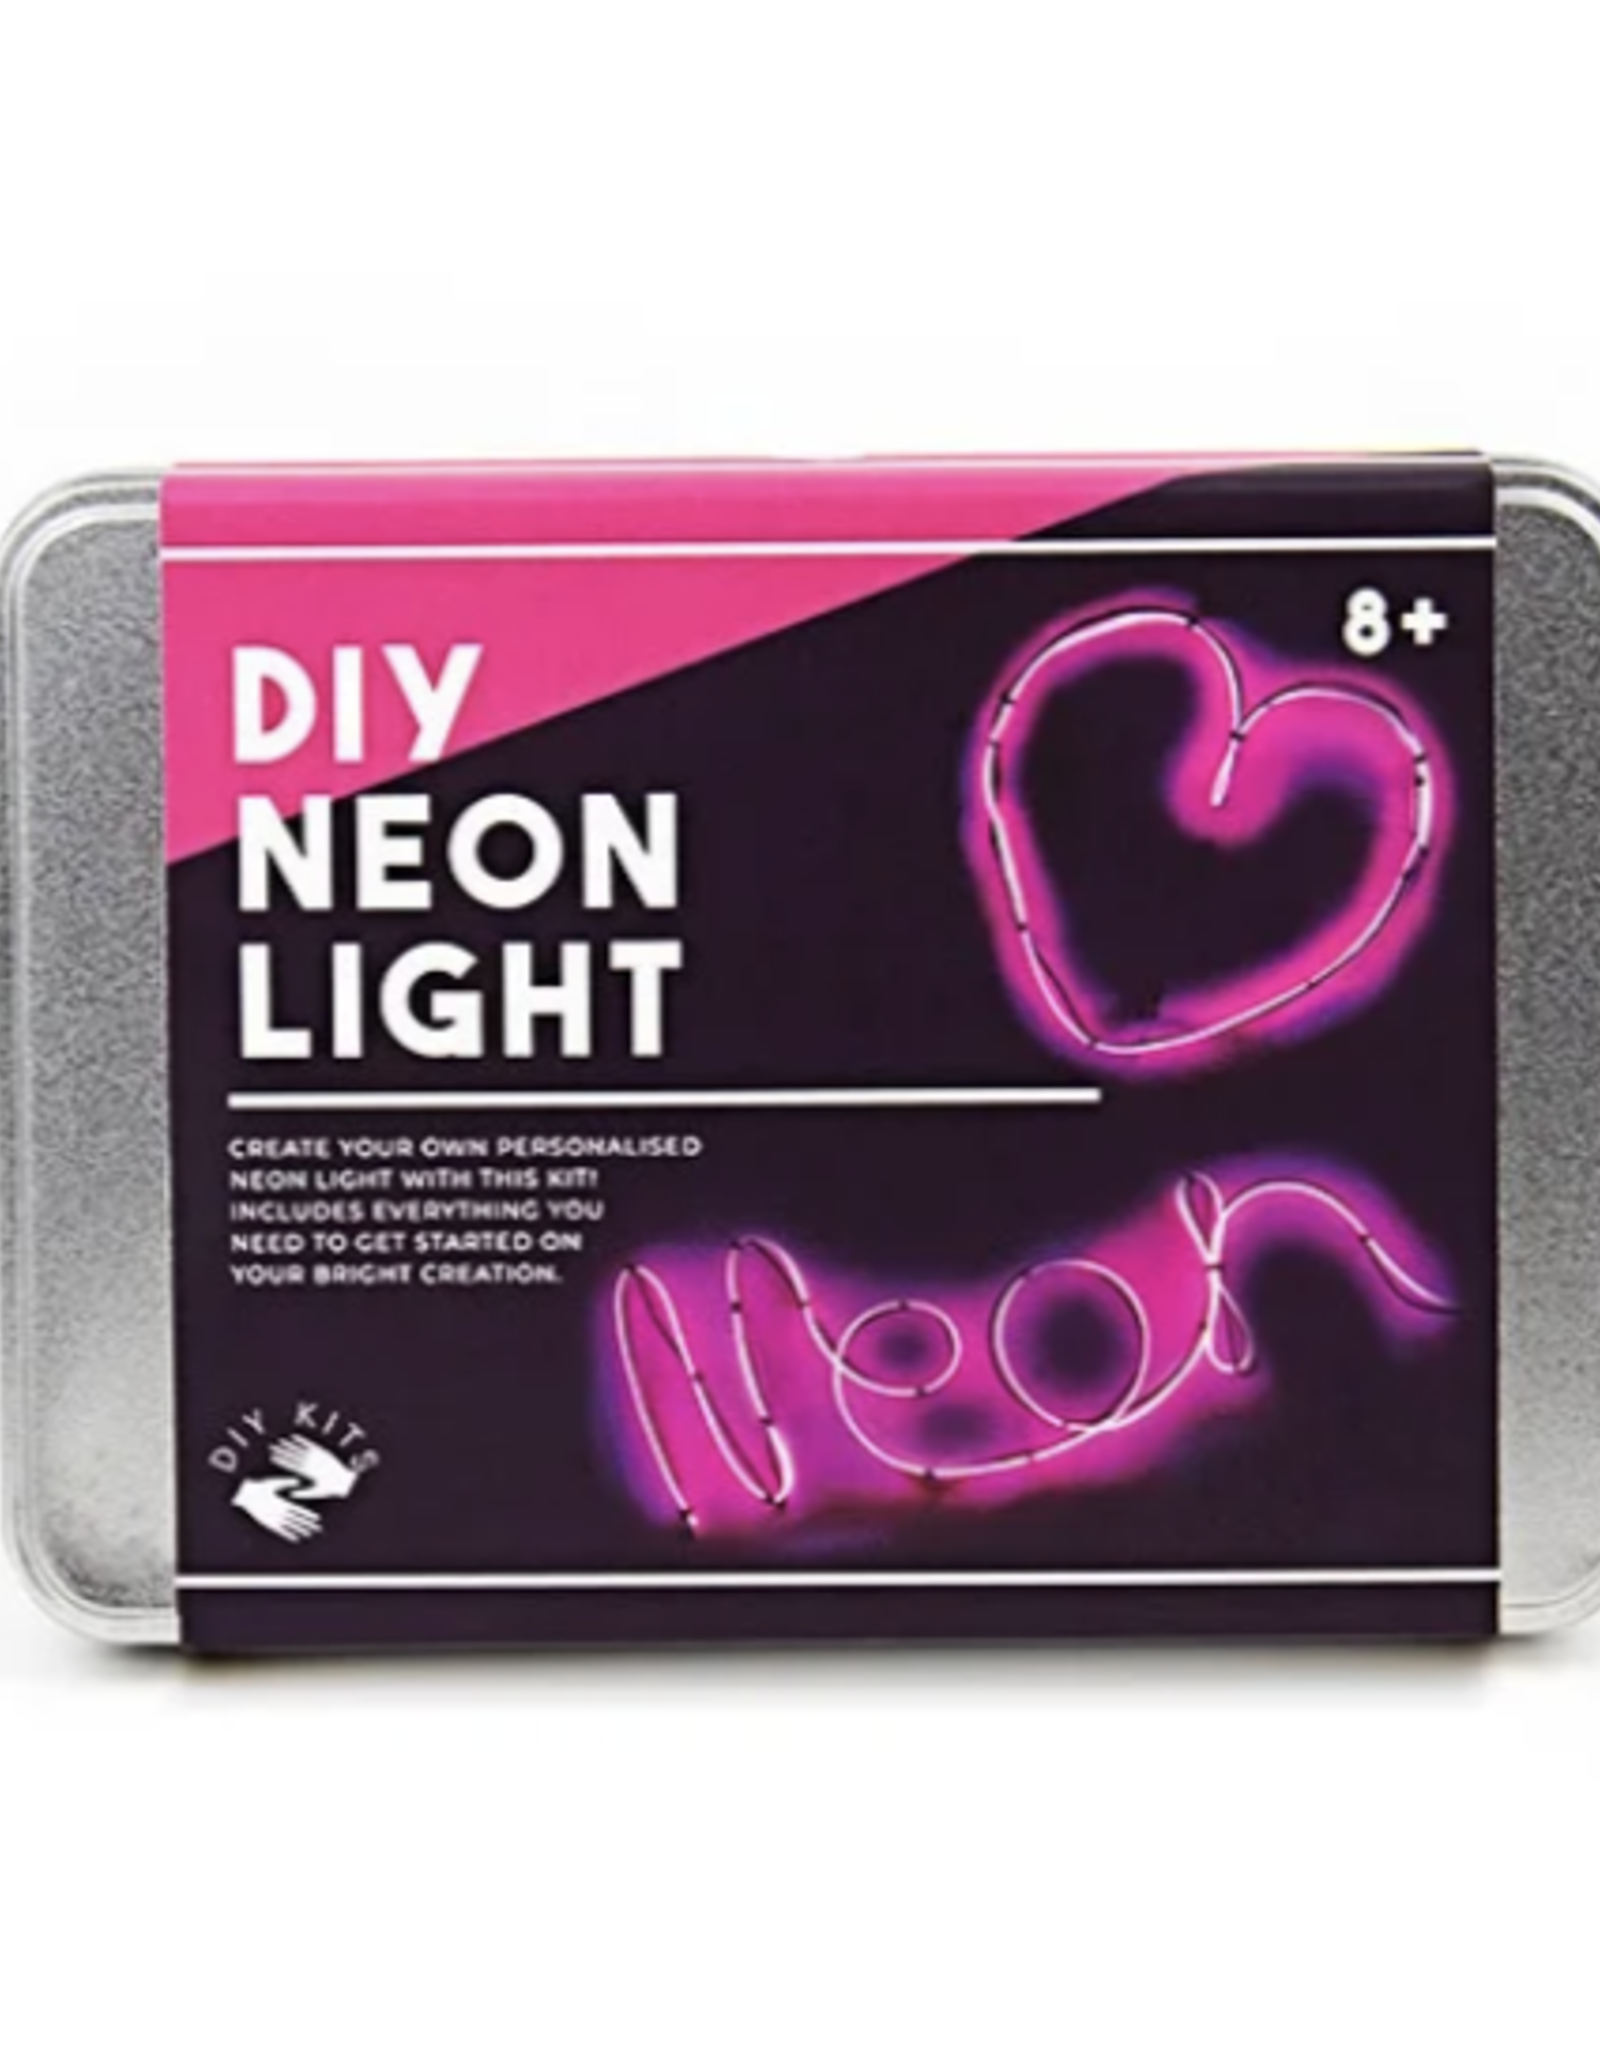 DIY Neon Light